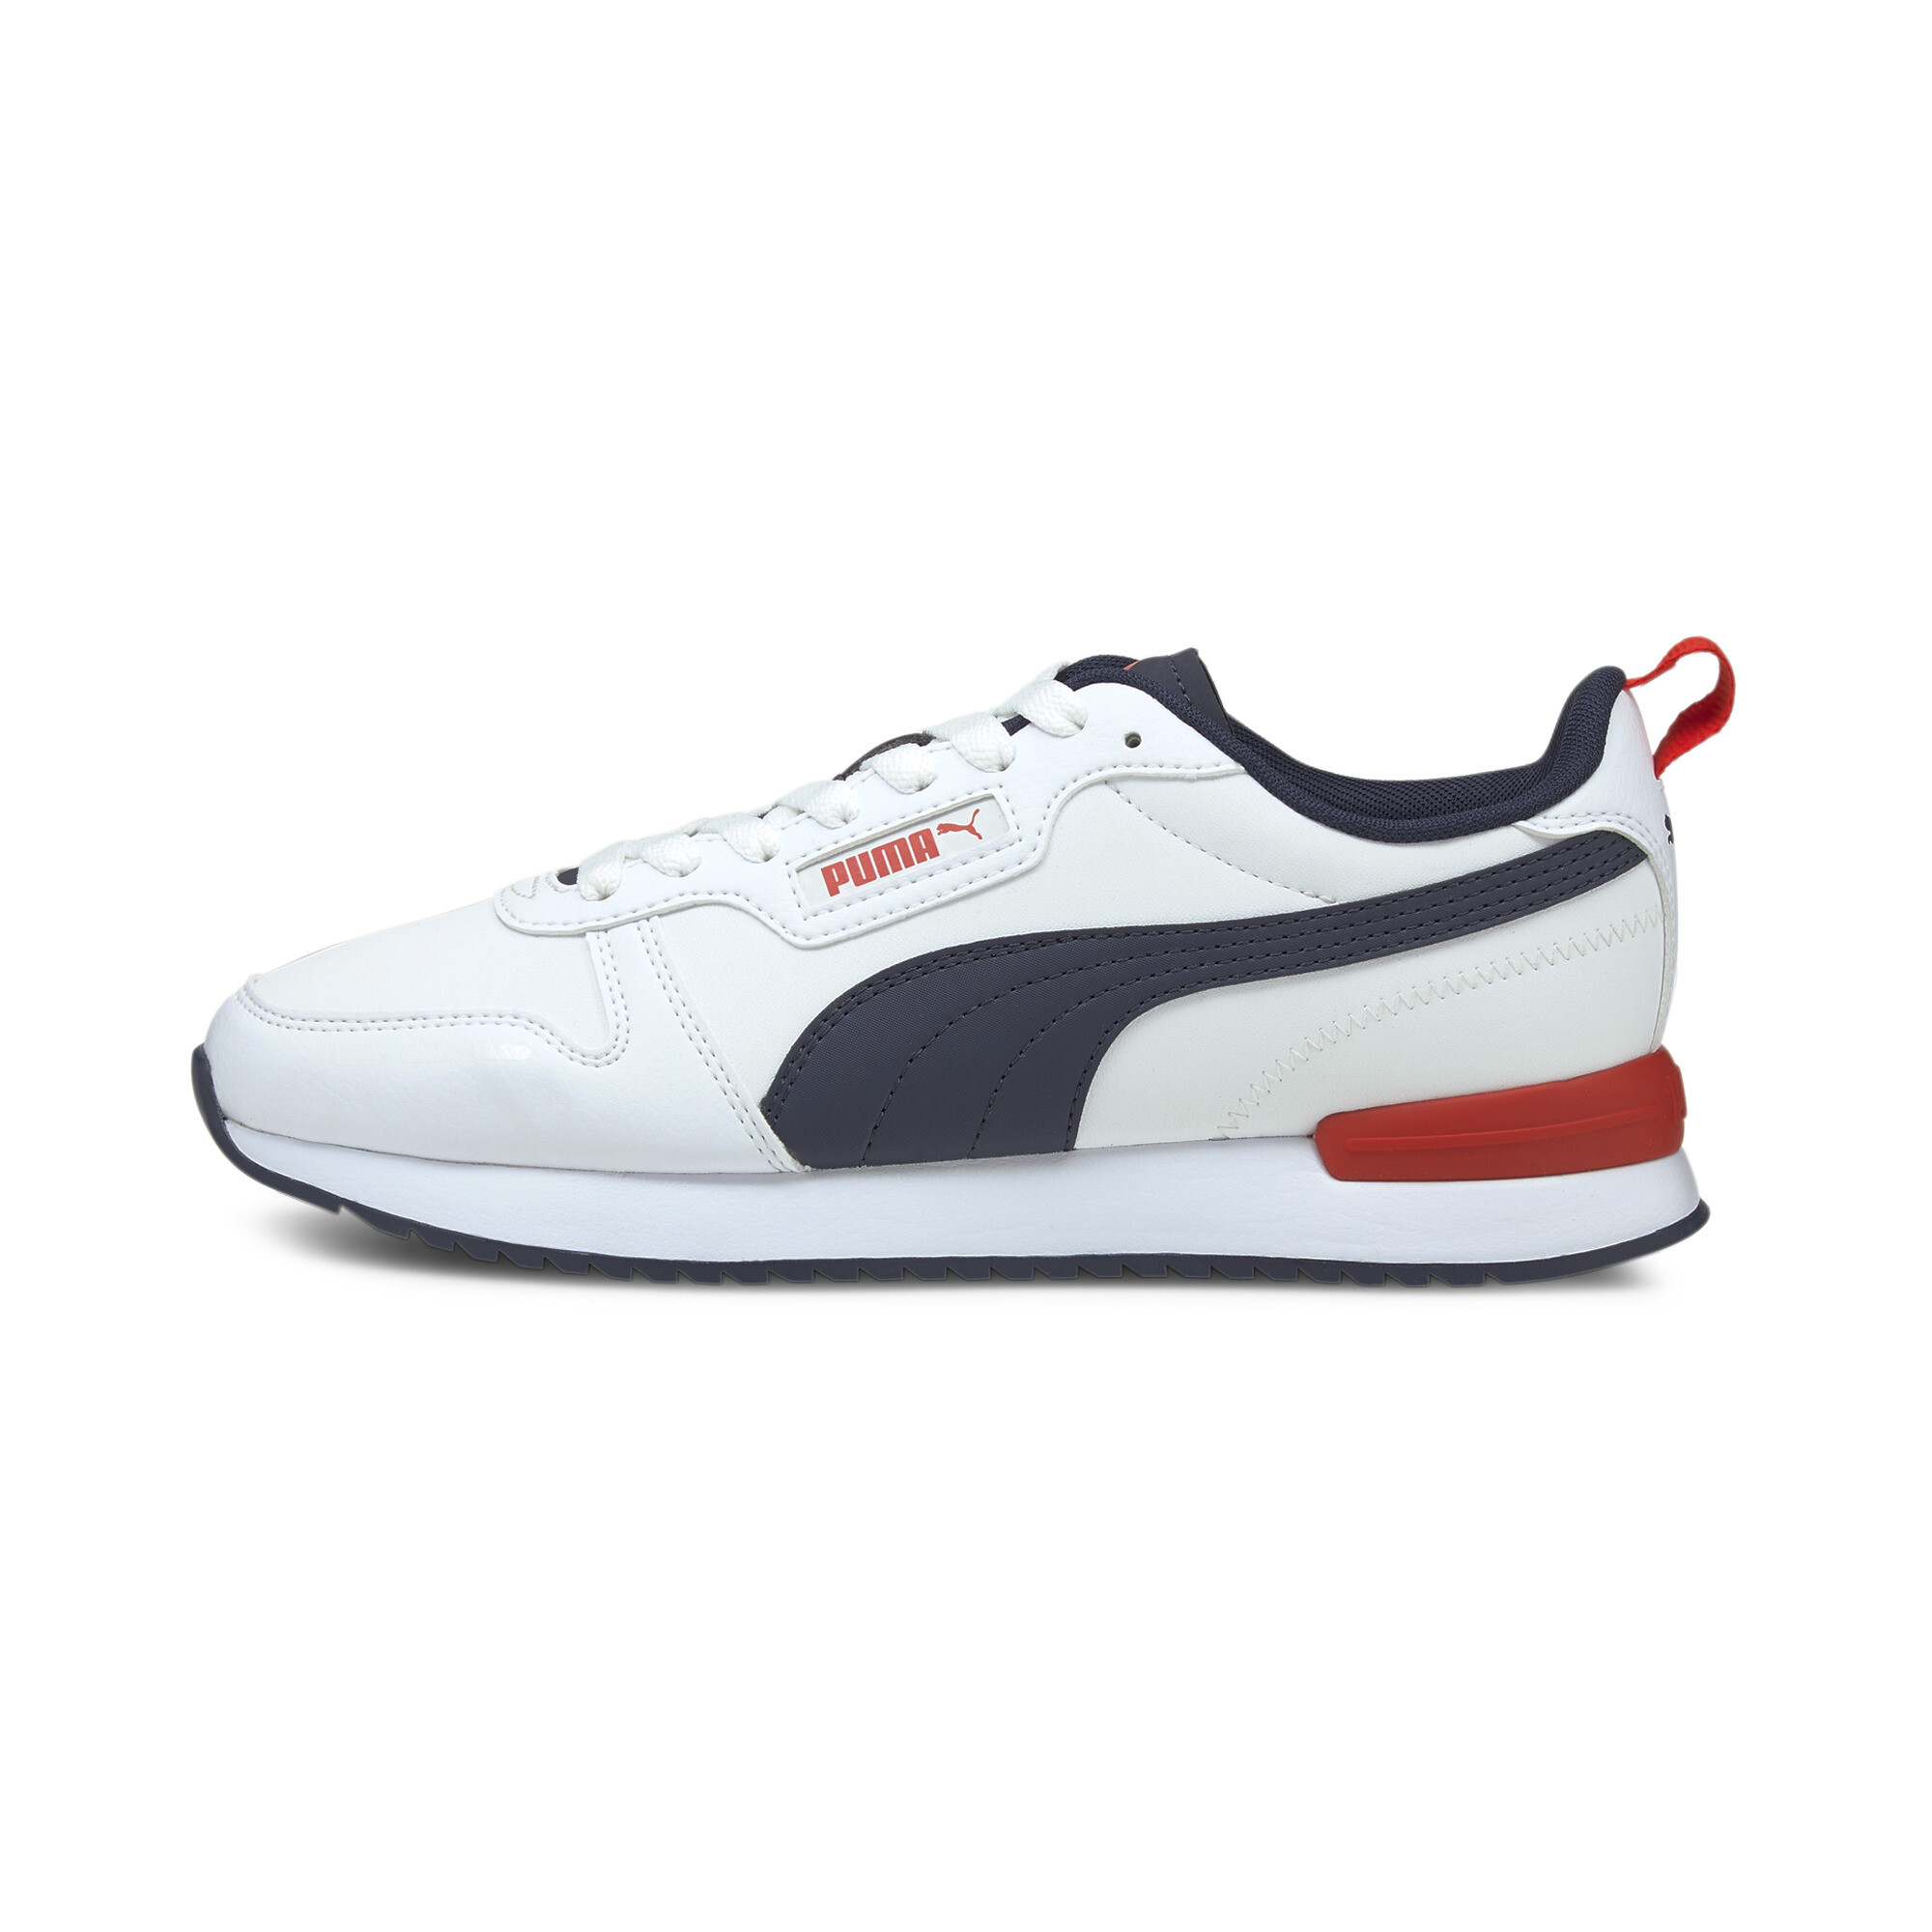 Indexbild 37 - PUMA R78 Sneaker Unisex Schuhe Basics Neu